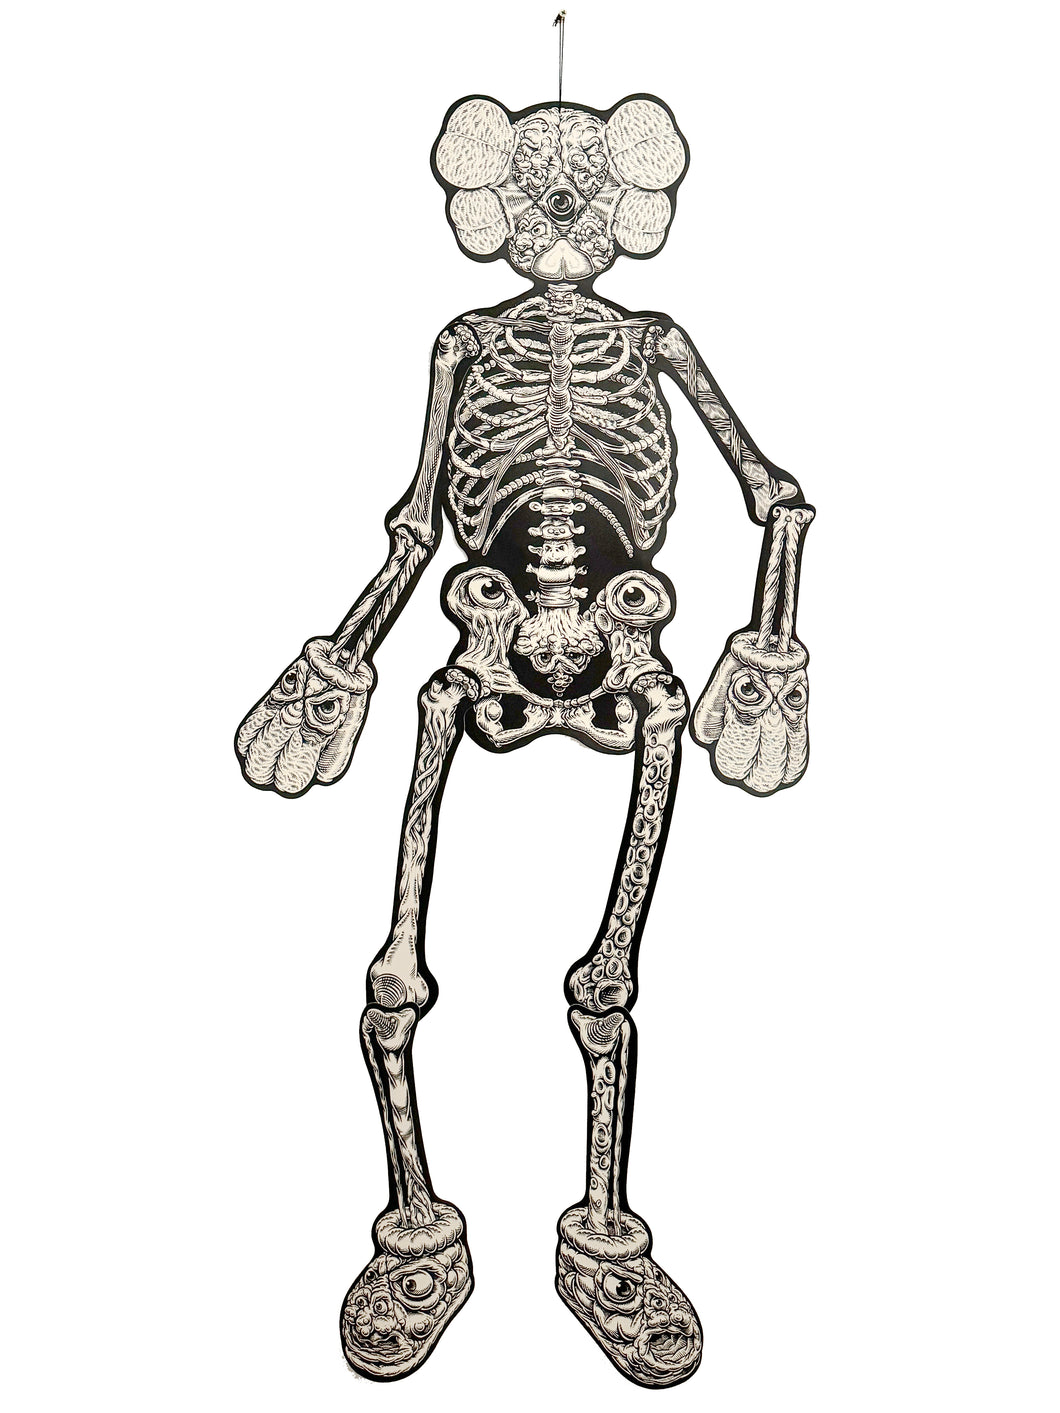 KAWS X Mark Dean Veca Companion Skeleton, 2008